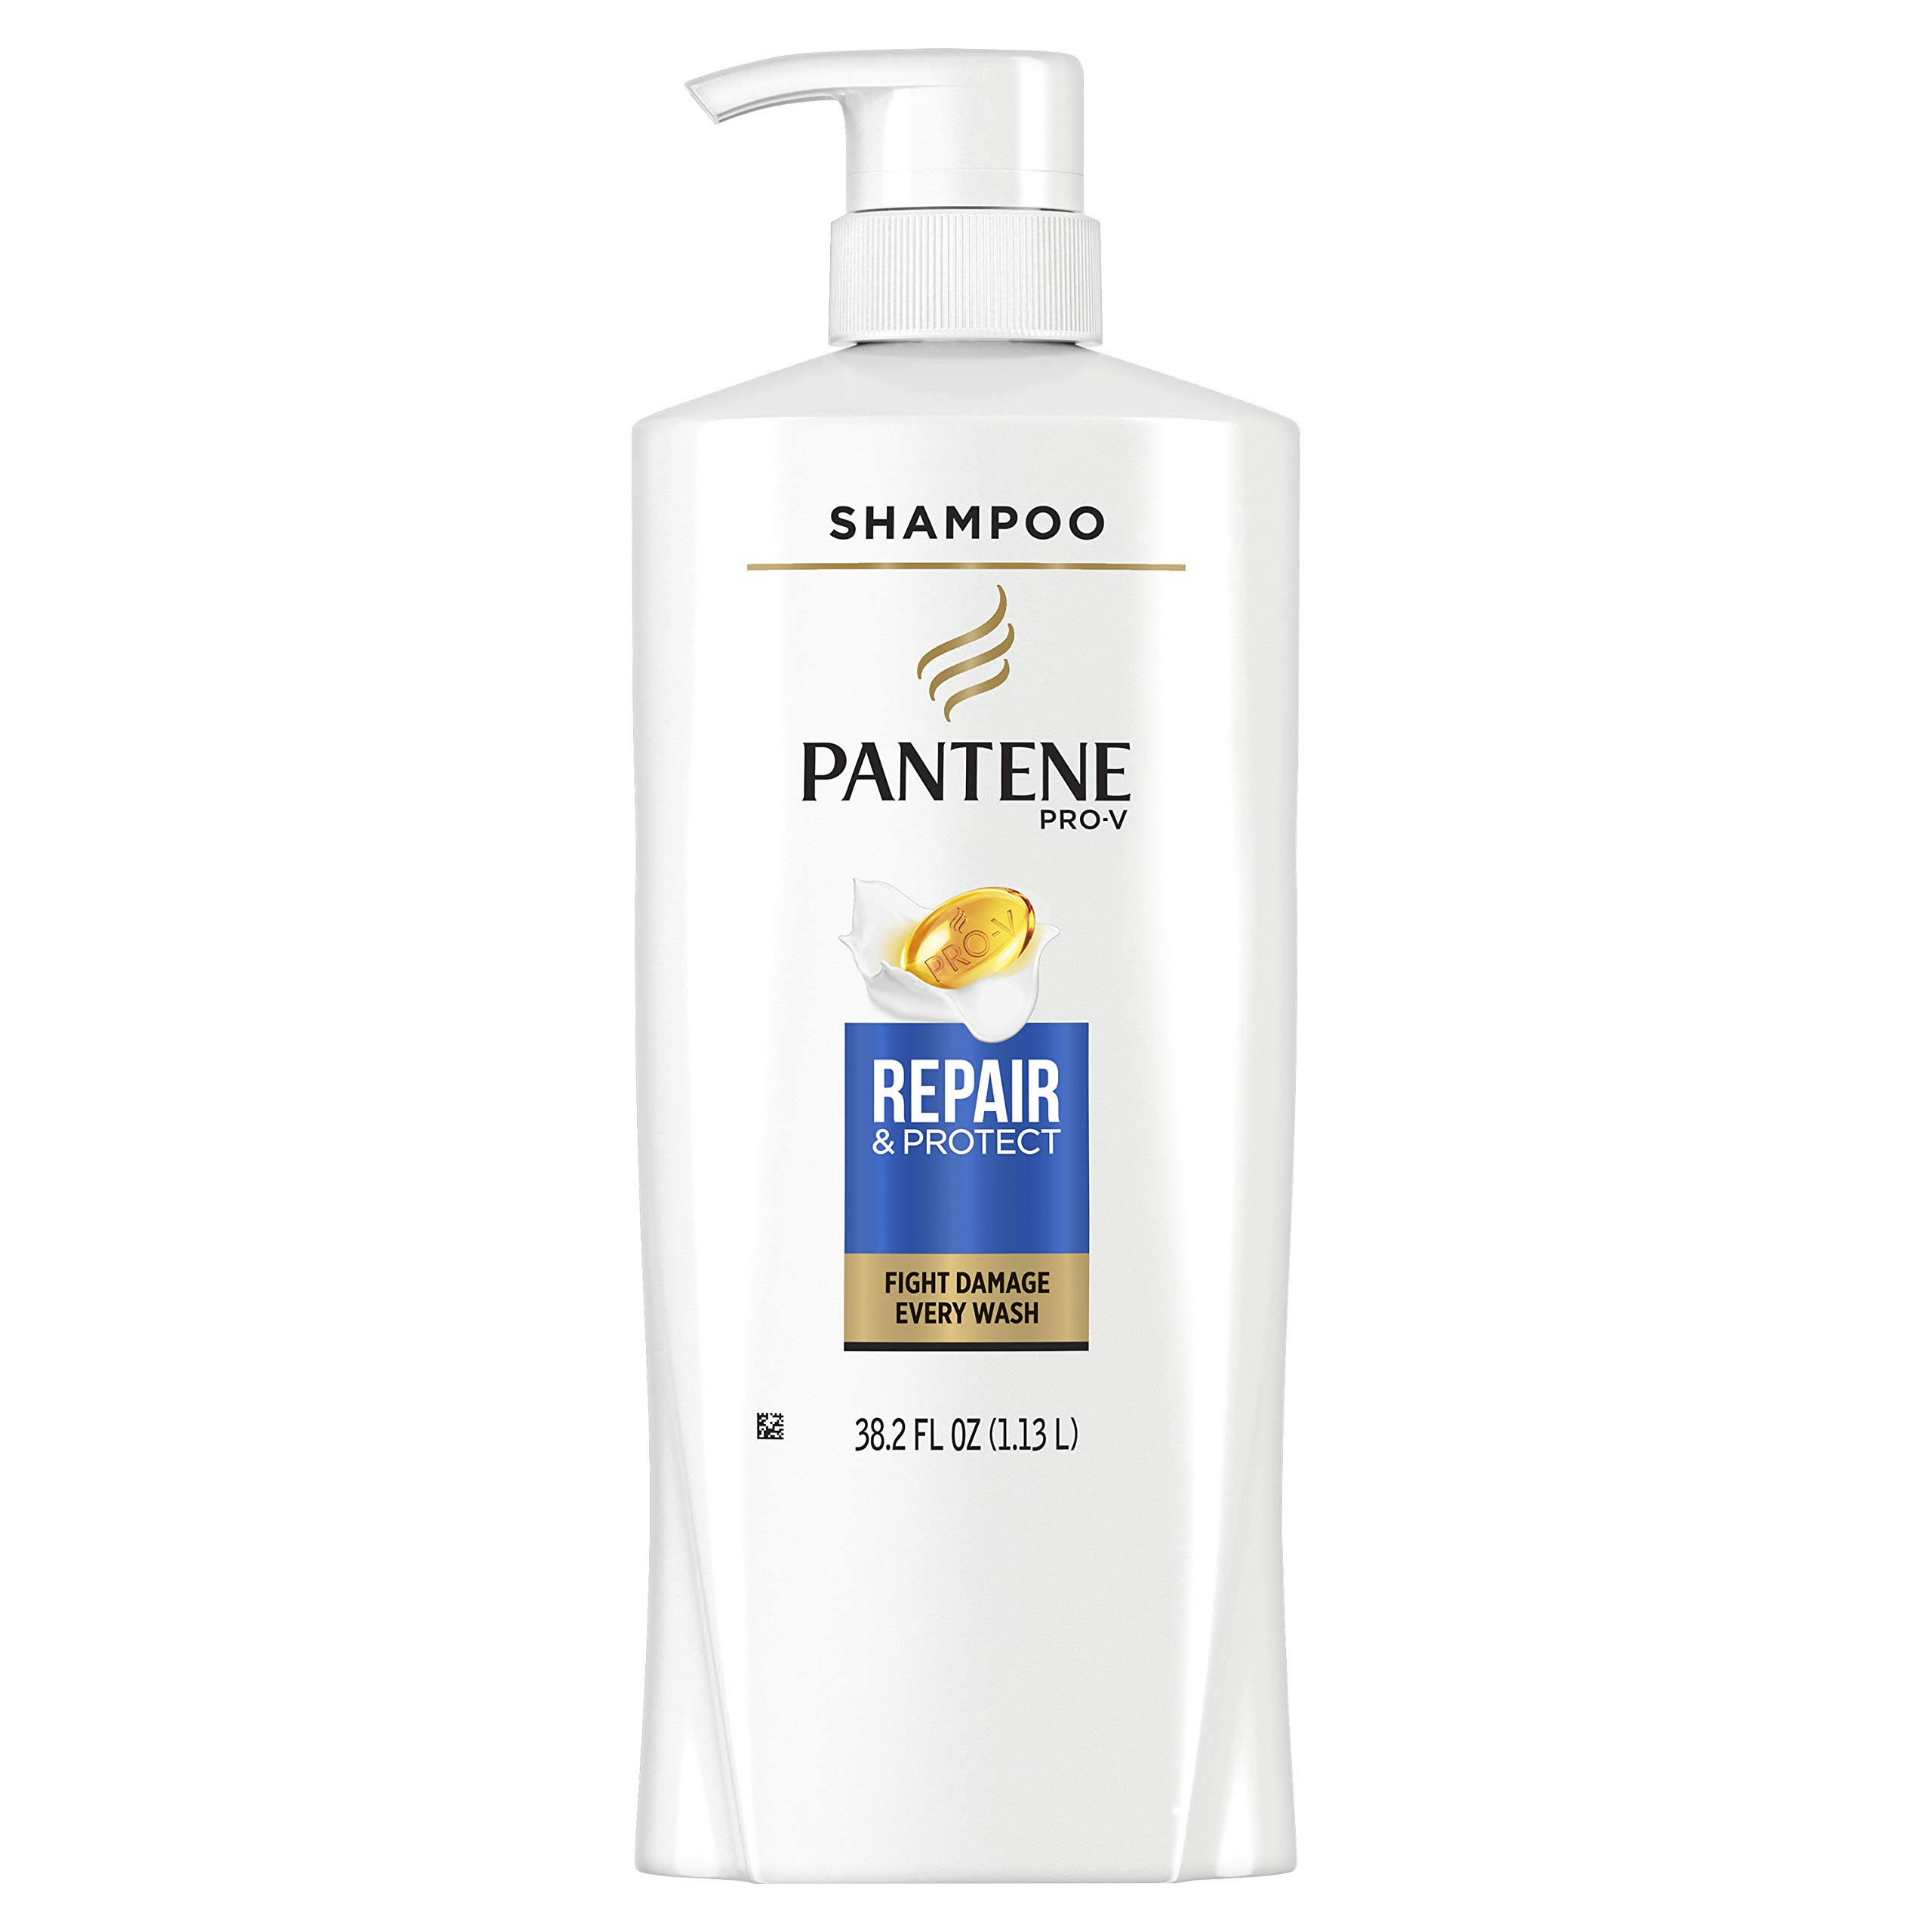 Pantene Pro-V Repair & Protect Shampoo - 38.2 fl oz